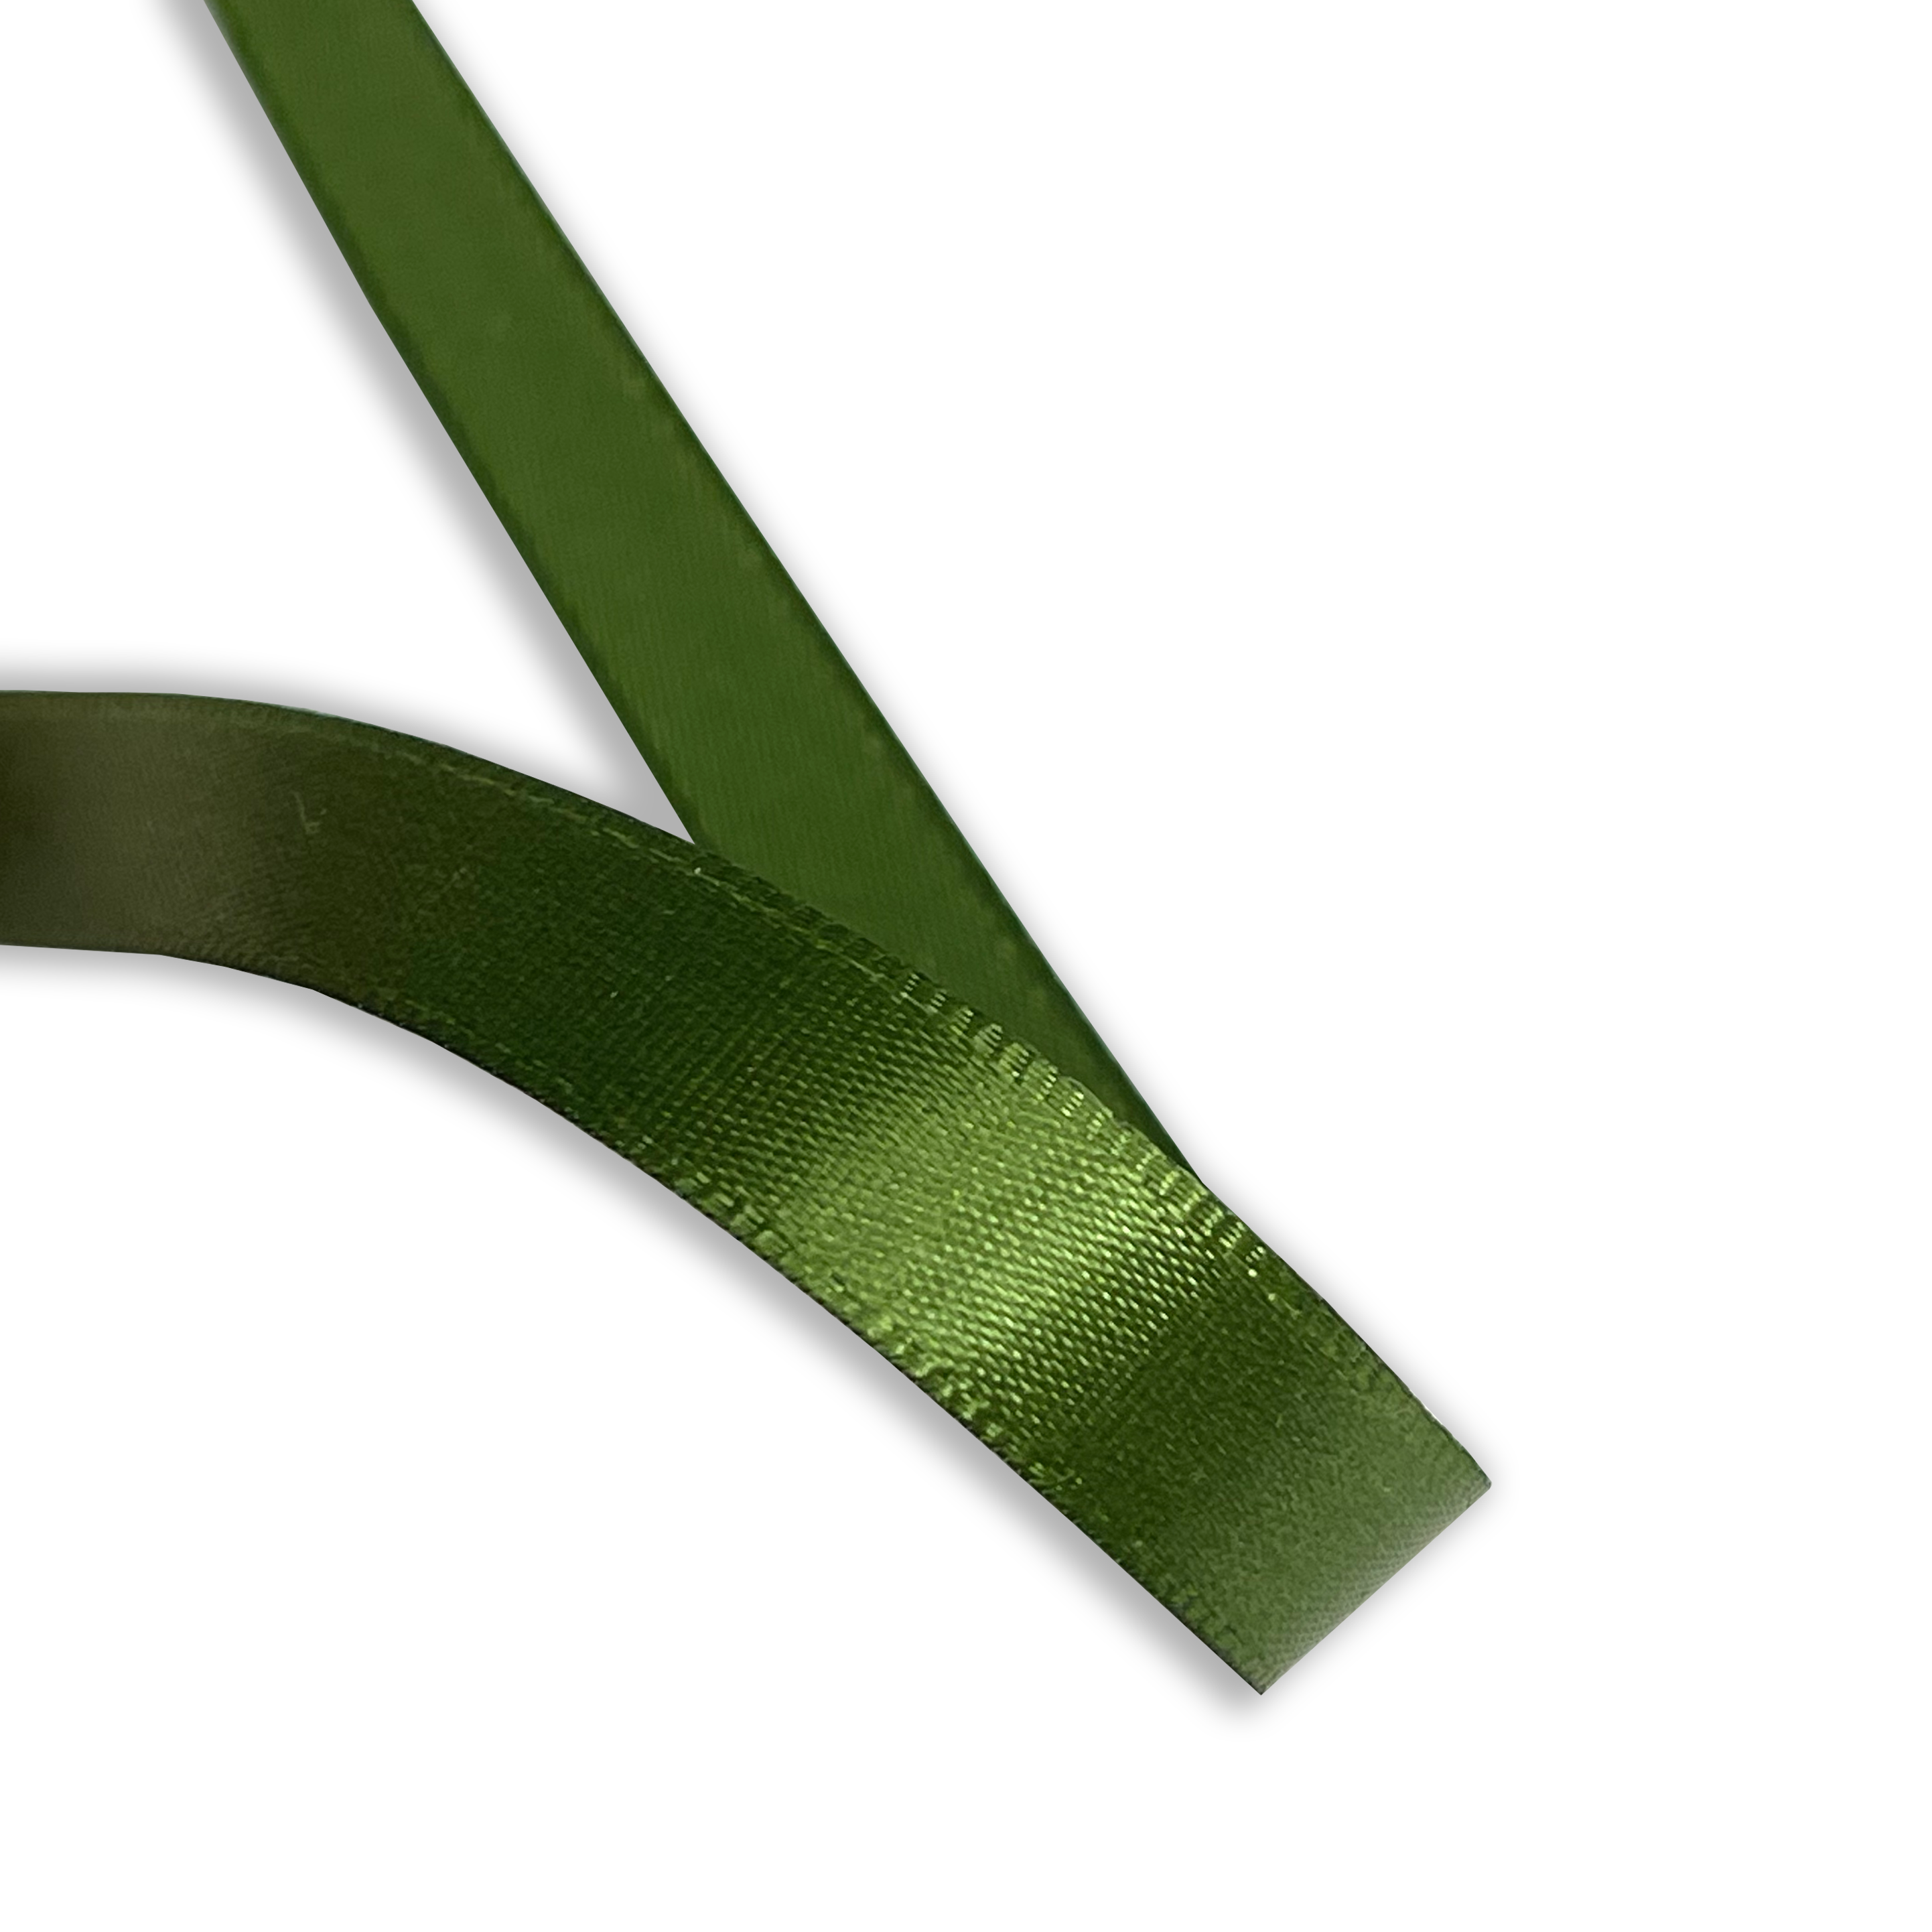 Kort & Godt - Silkebånd - Grønn - 10mm - Metervis